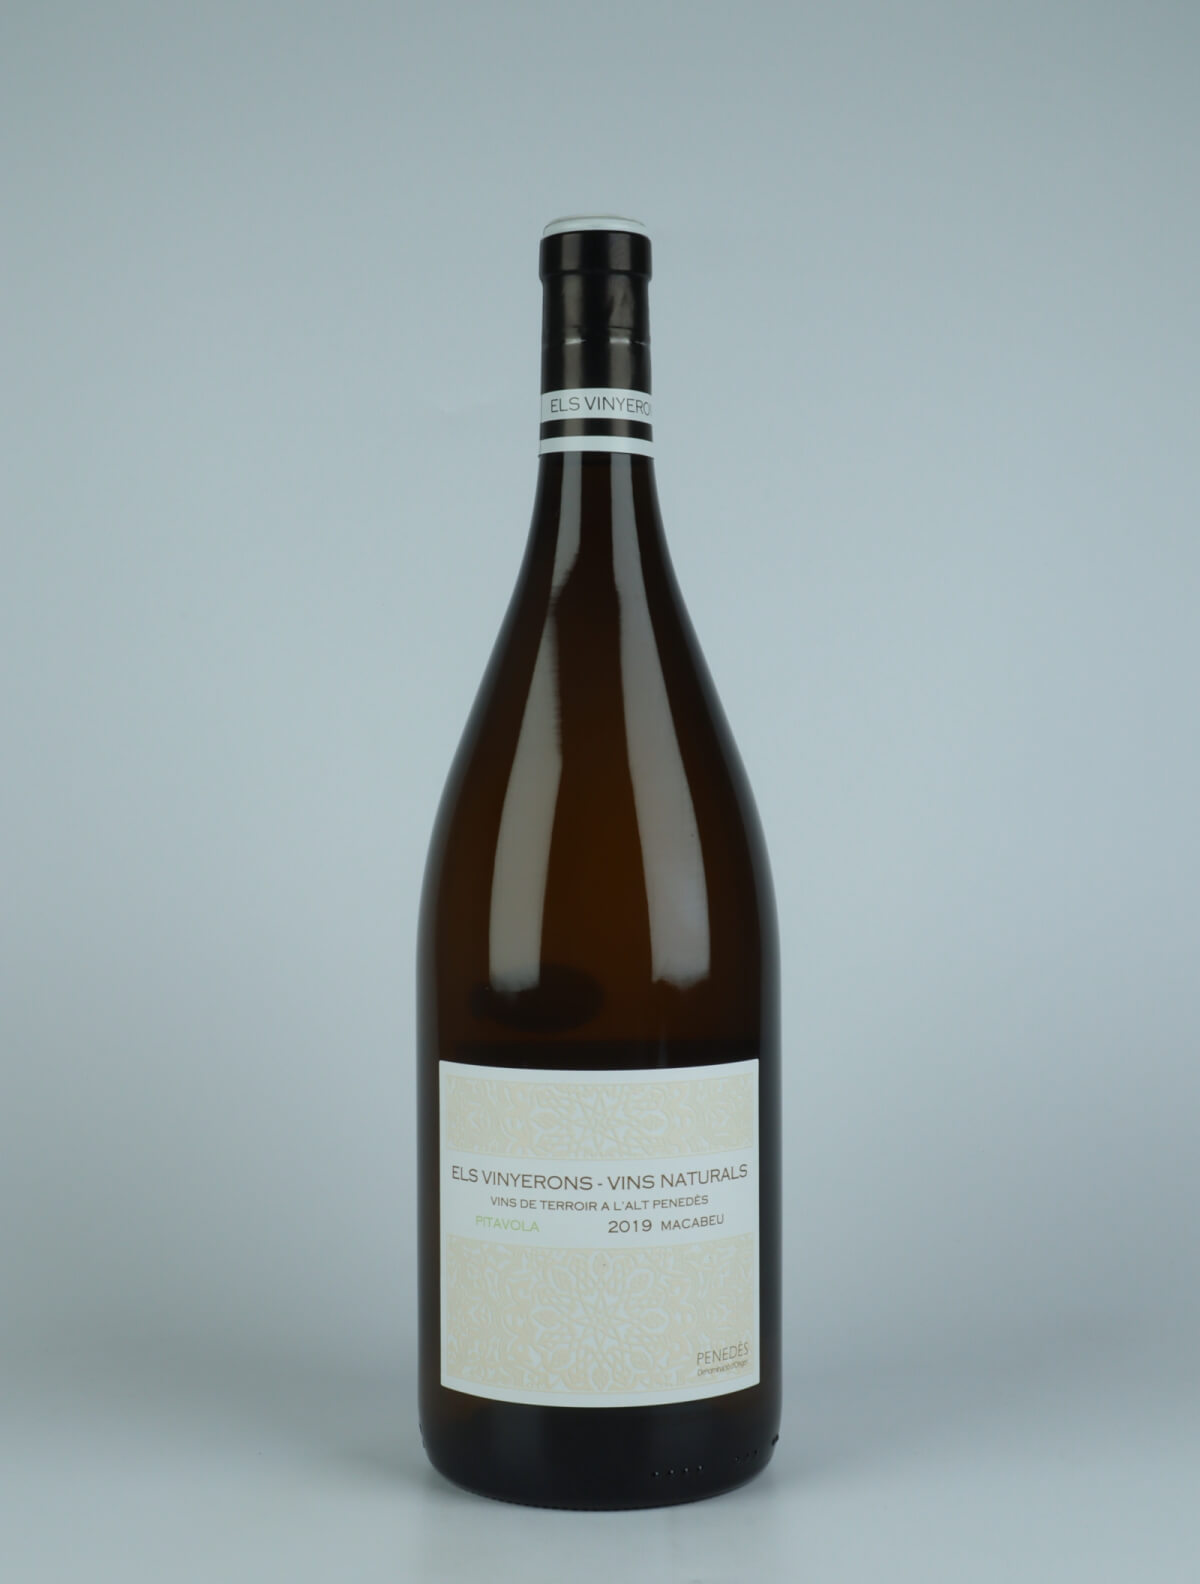 A bottle 2019 Pitavola White wine from Els Vinyerons, Penedès in Spain